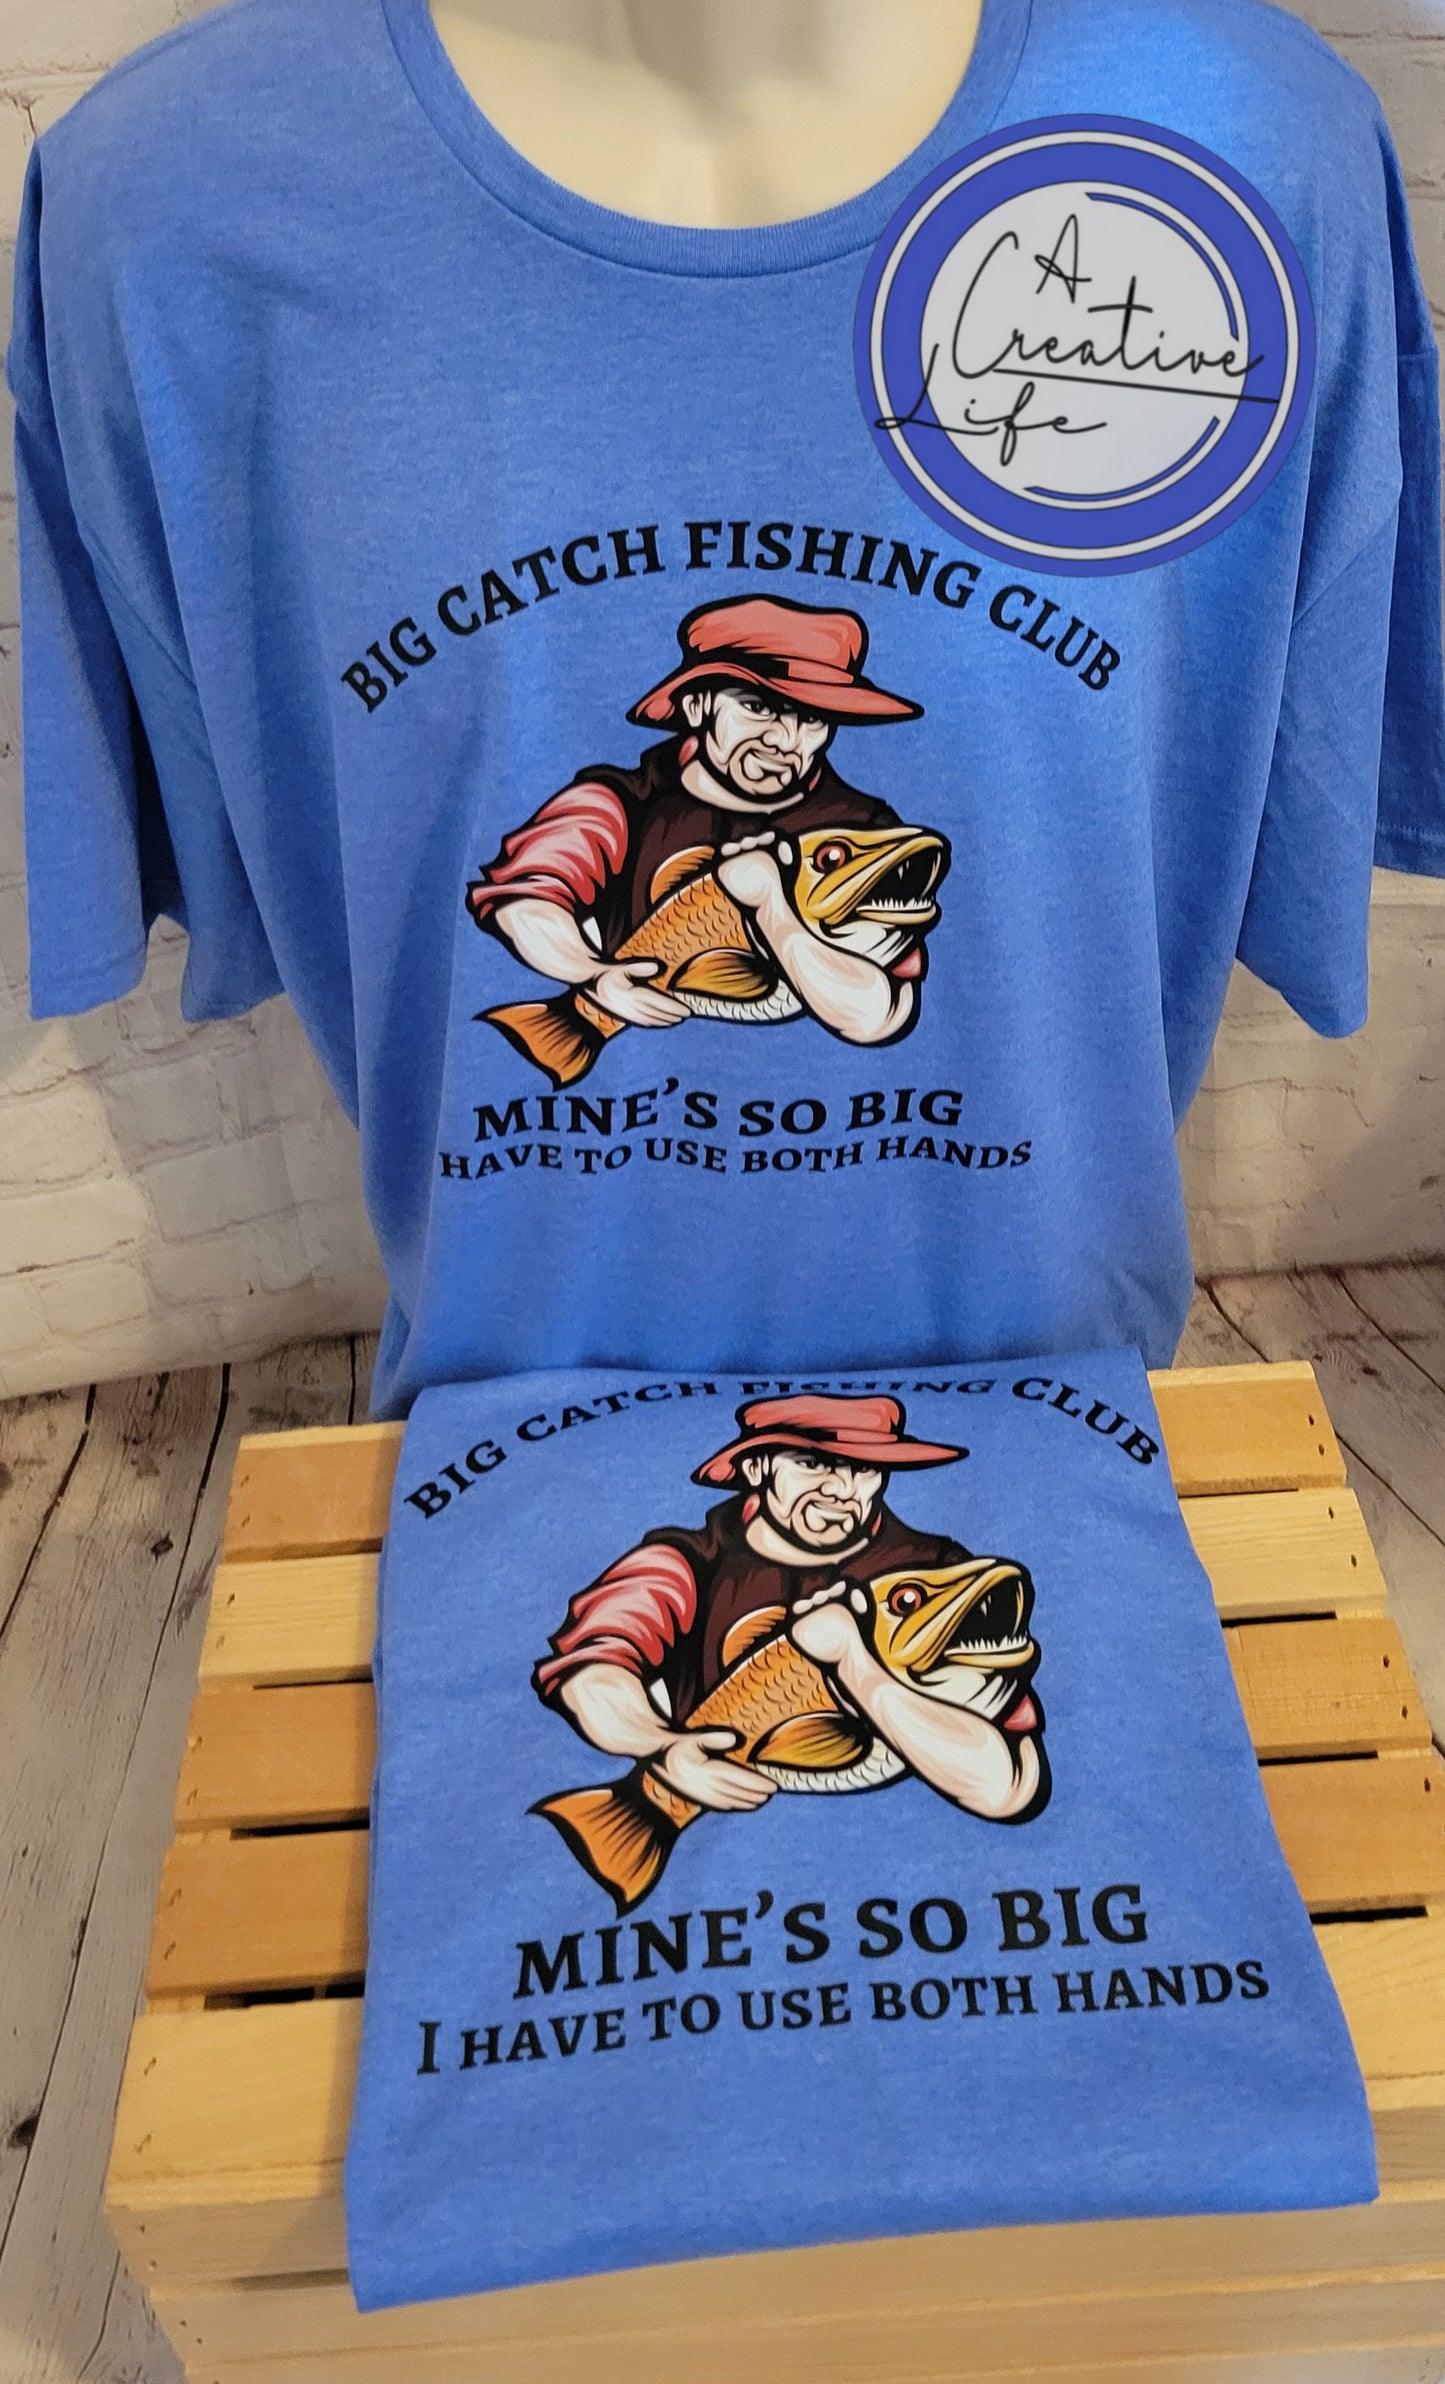 Big Catch Fishing Club